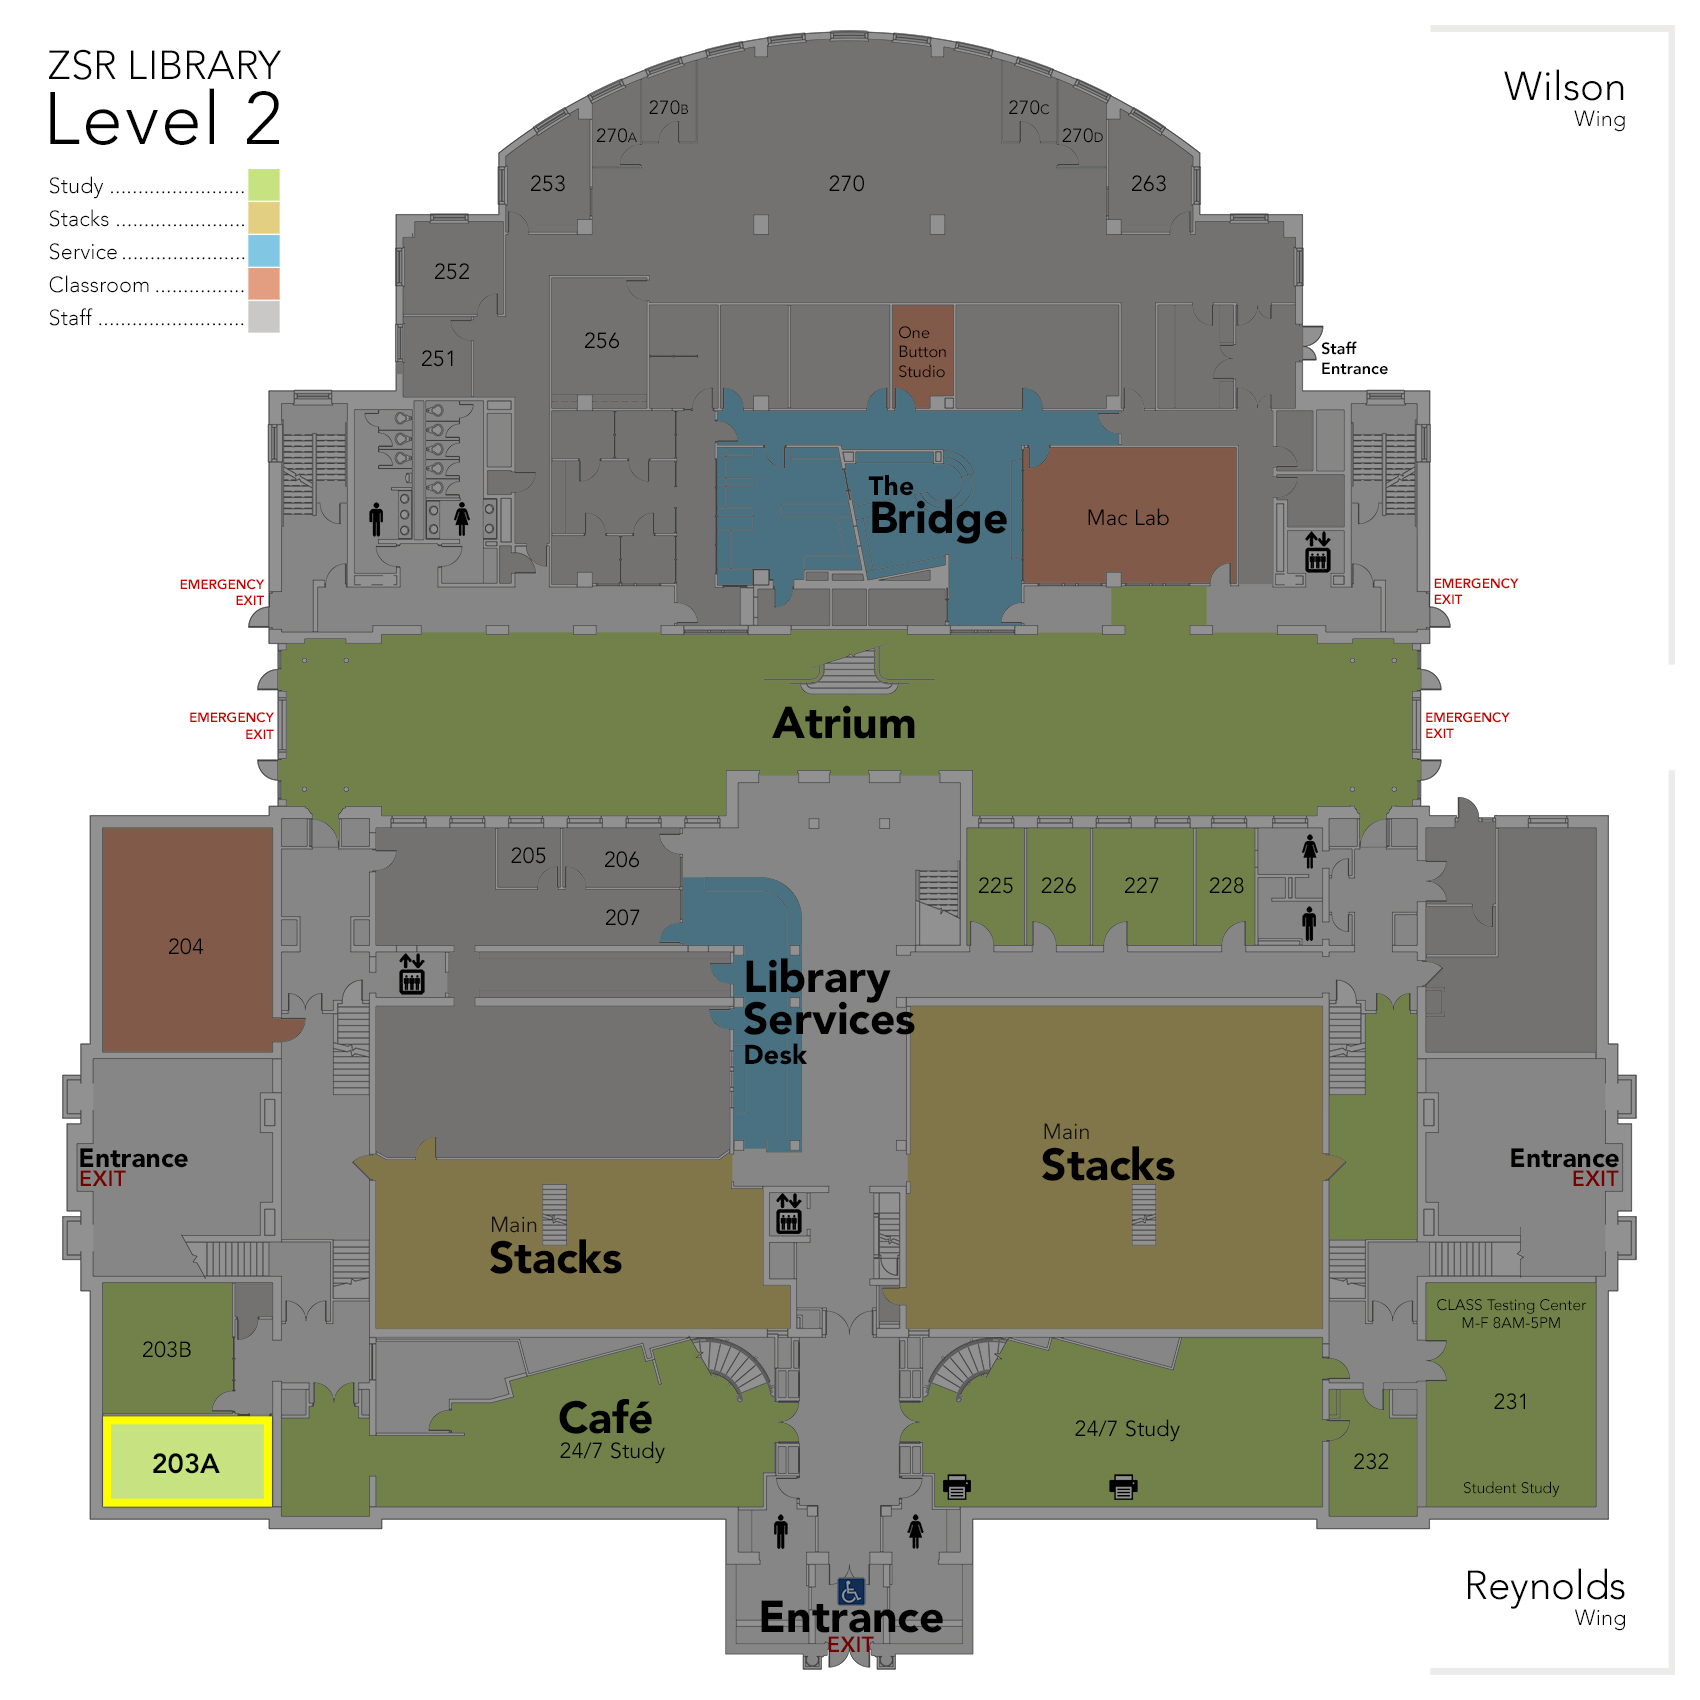 Level 2 Study Room 203A map